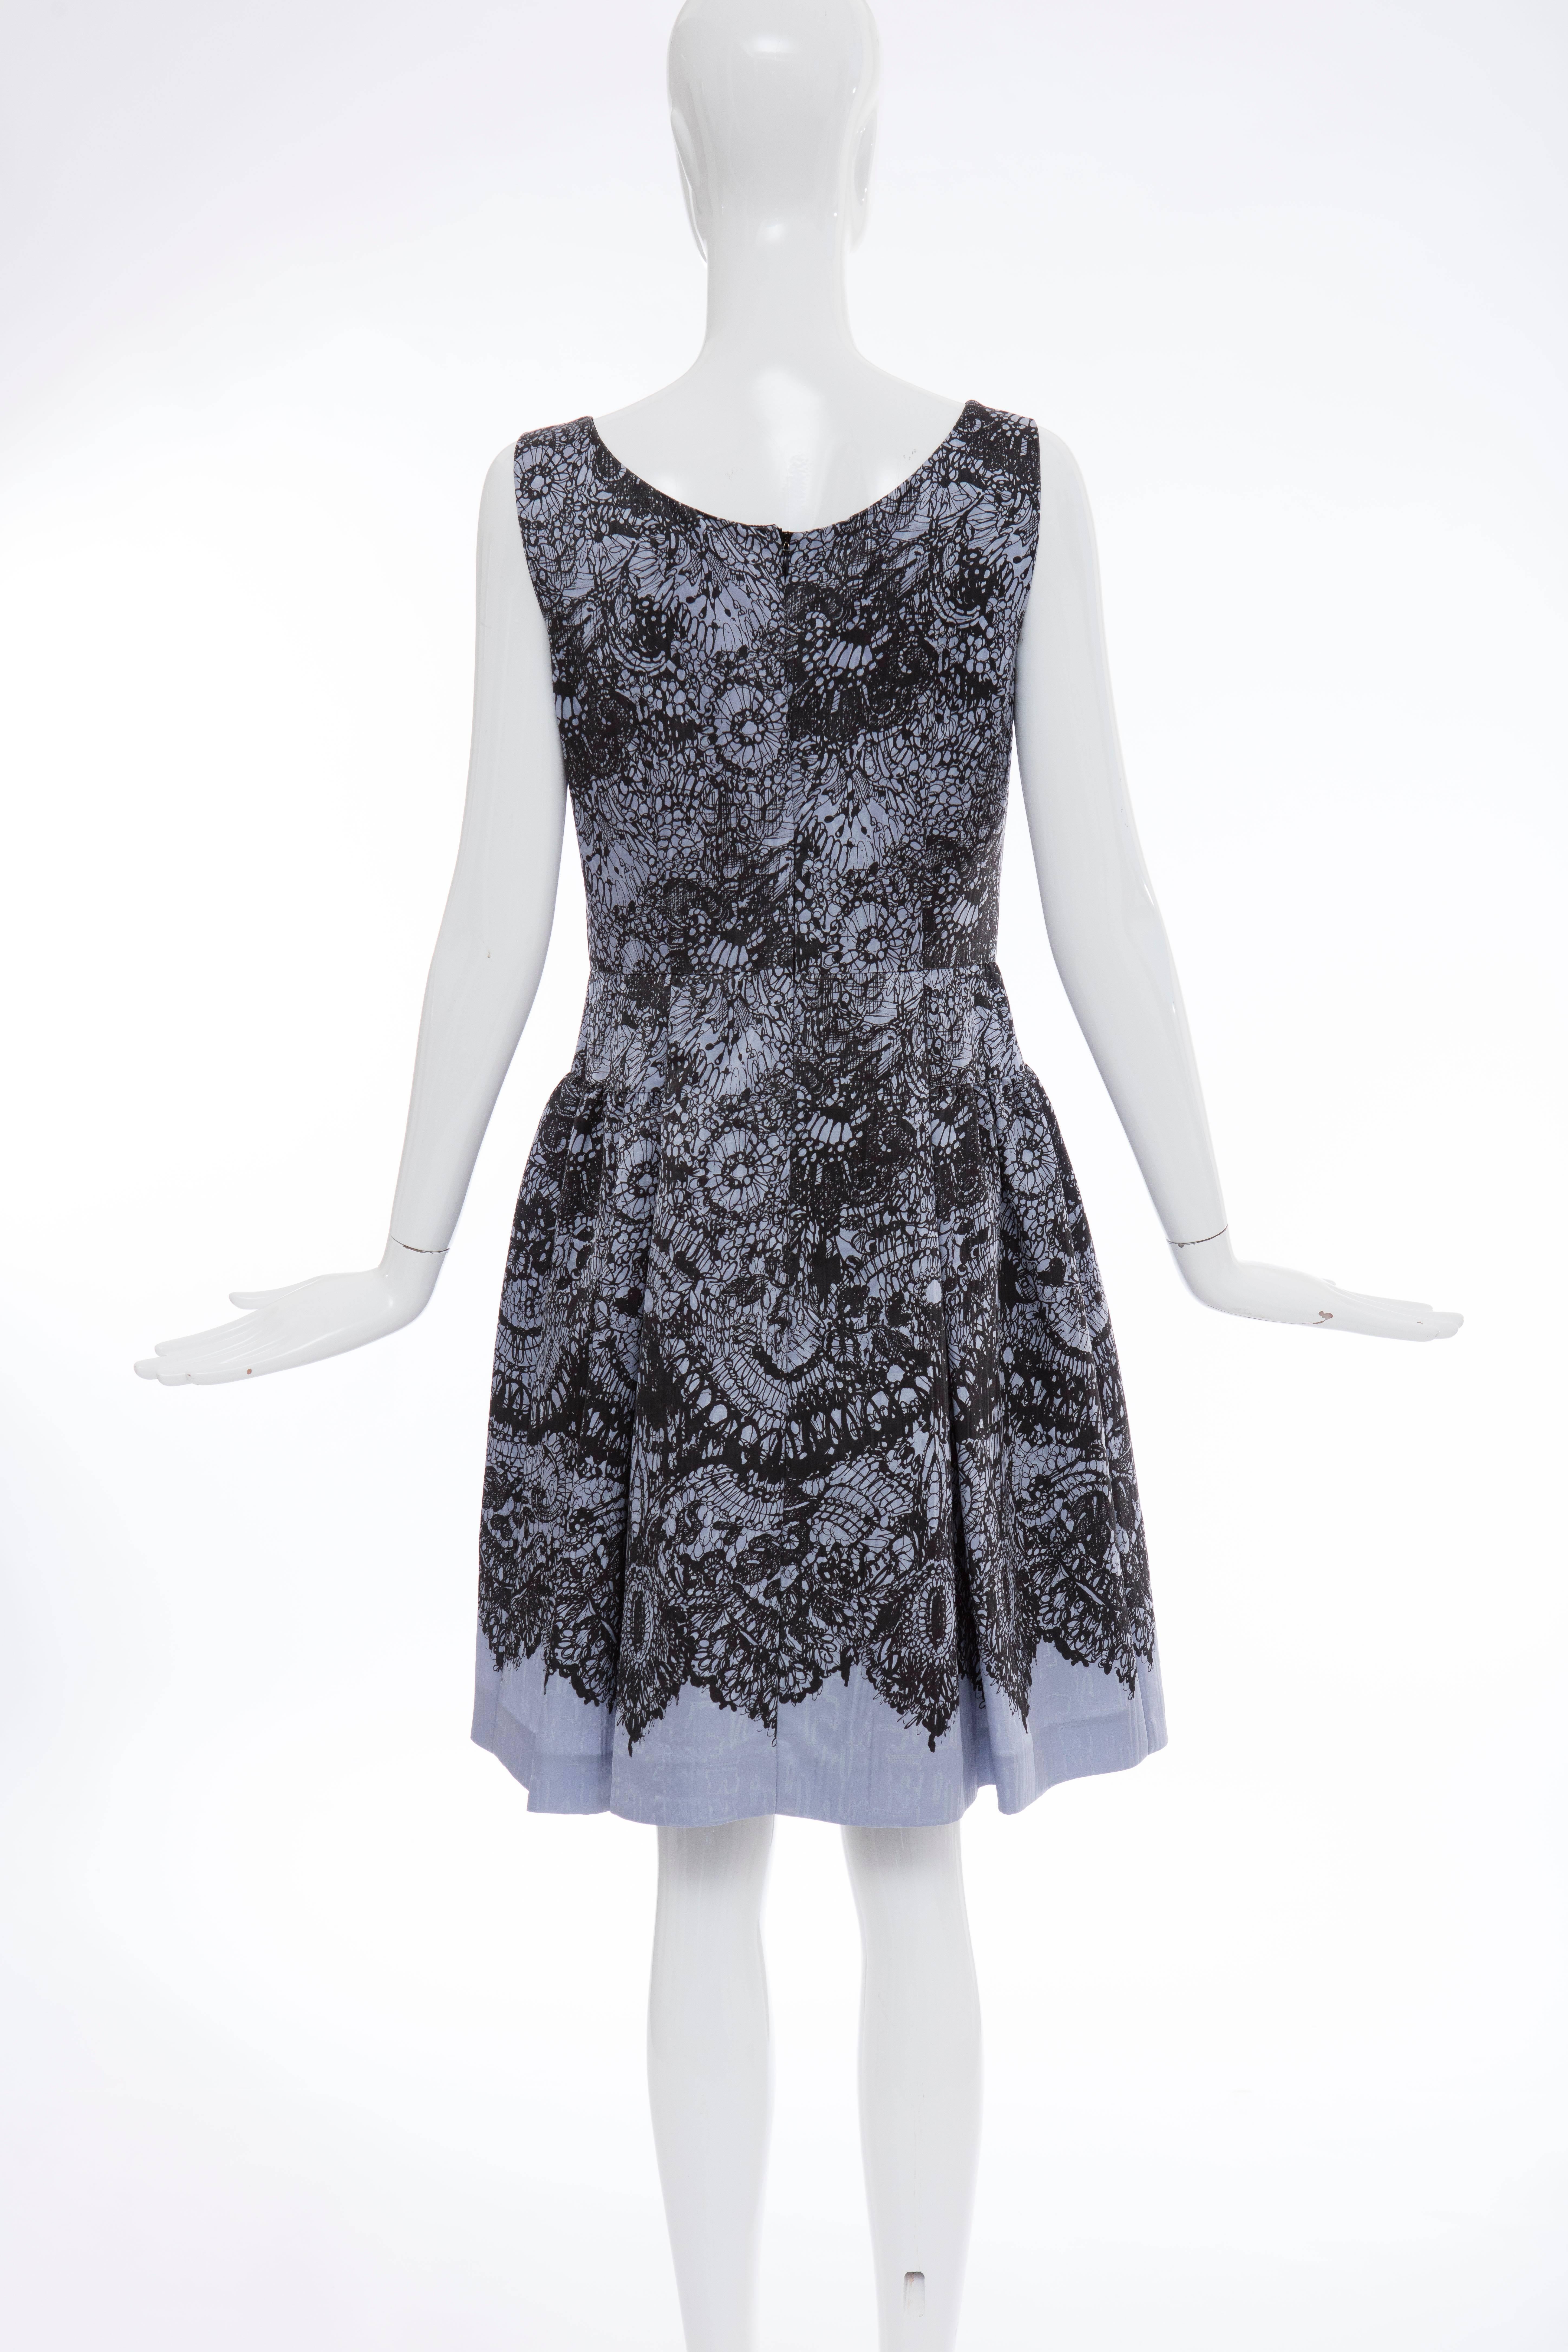 Prada Printed Viscose Silk Nylon Sleeveless Dress, Circa 2011 In Excellent Condition For Sale In Cincinnati, OH